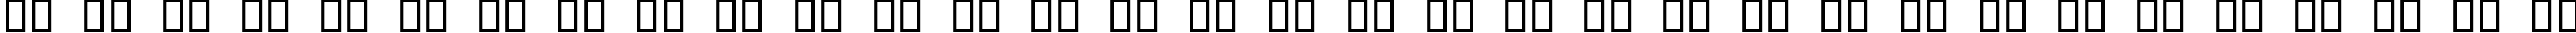 Пример написания русского алфавита шрифтом BlottoooLightBeer